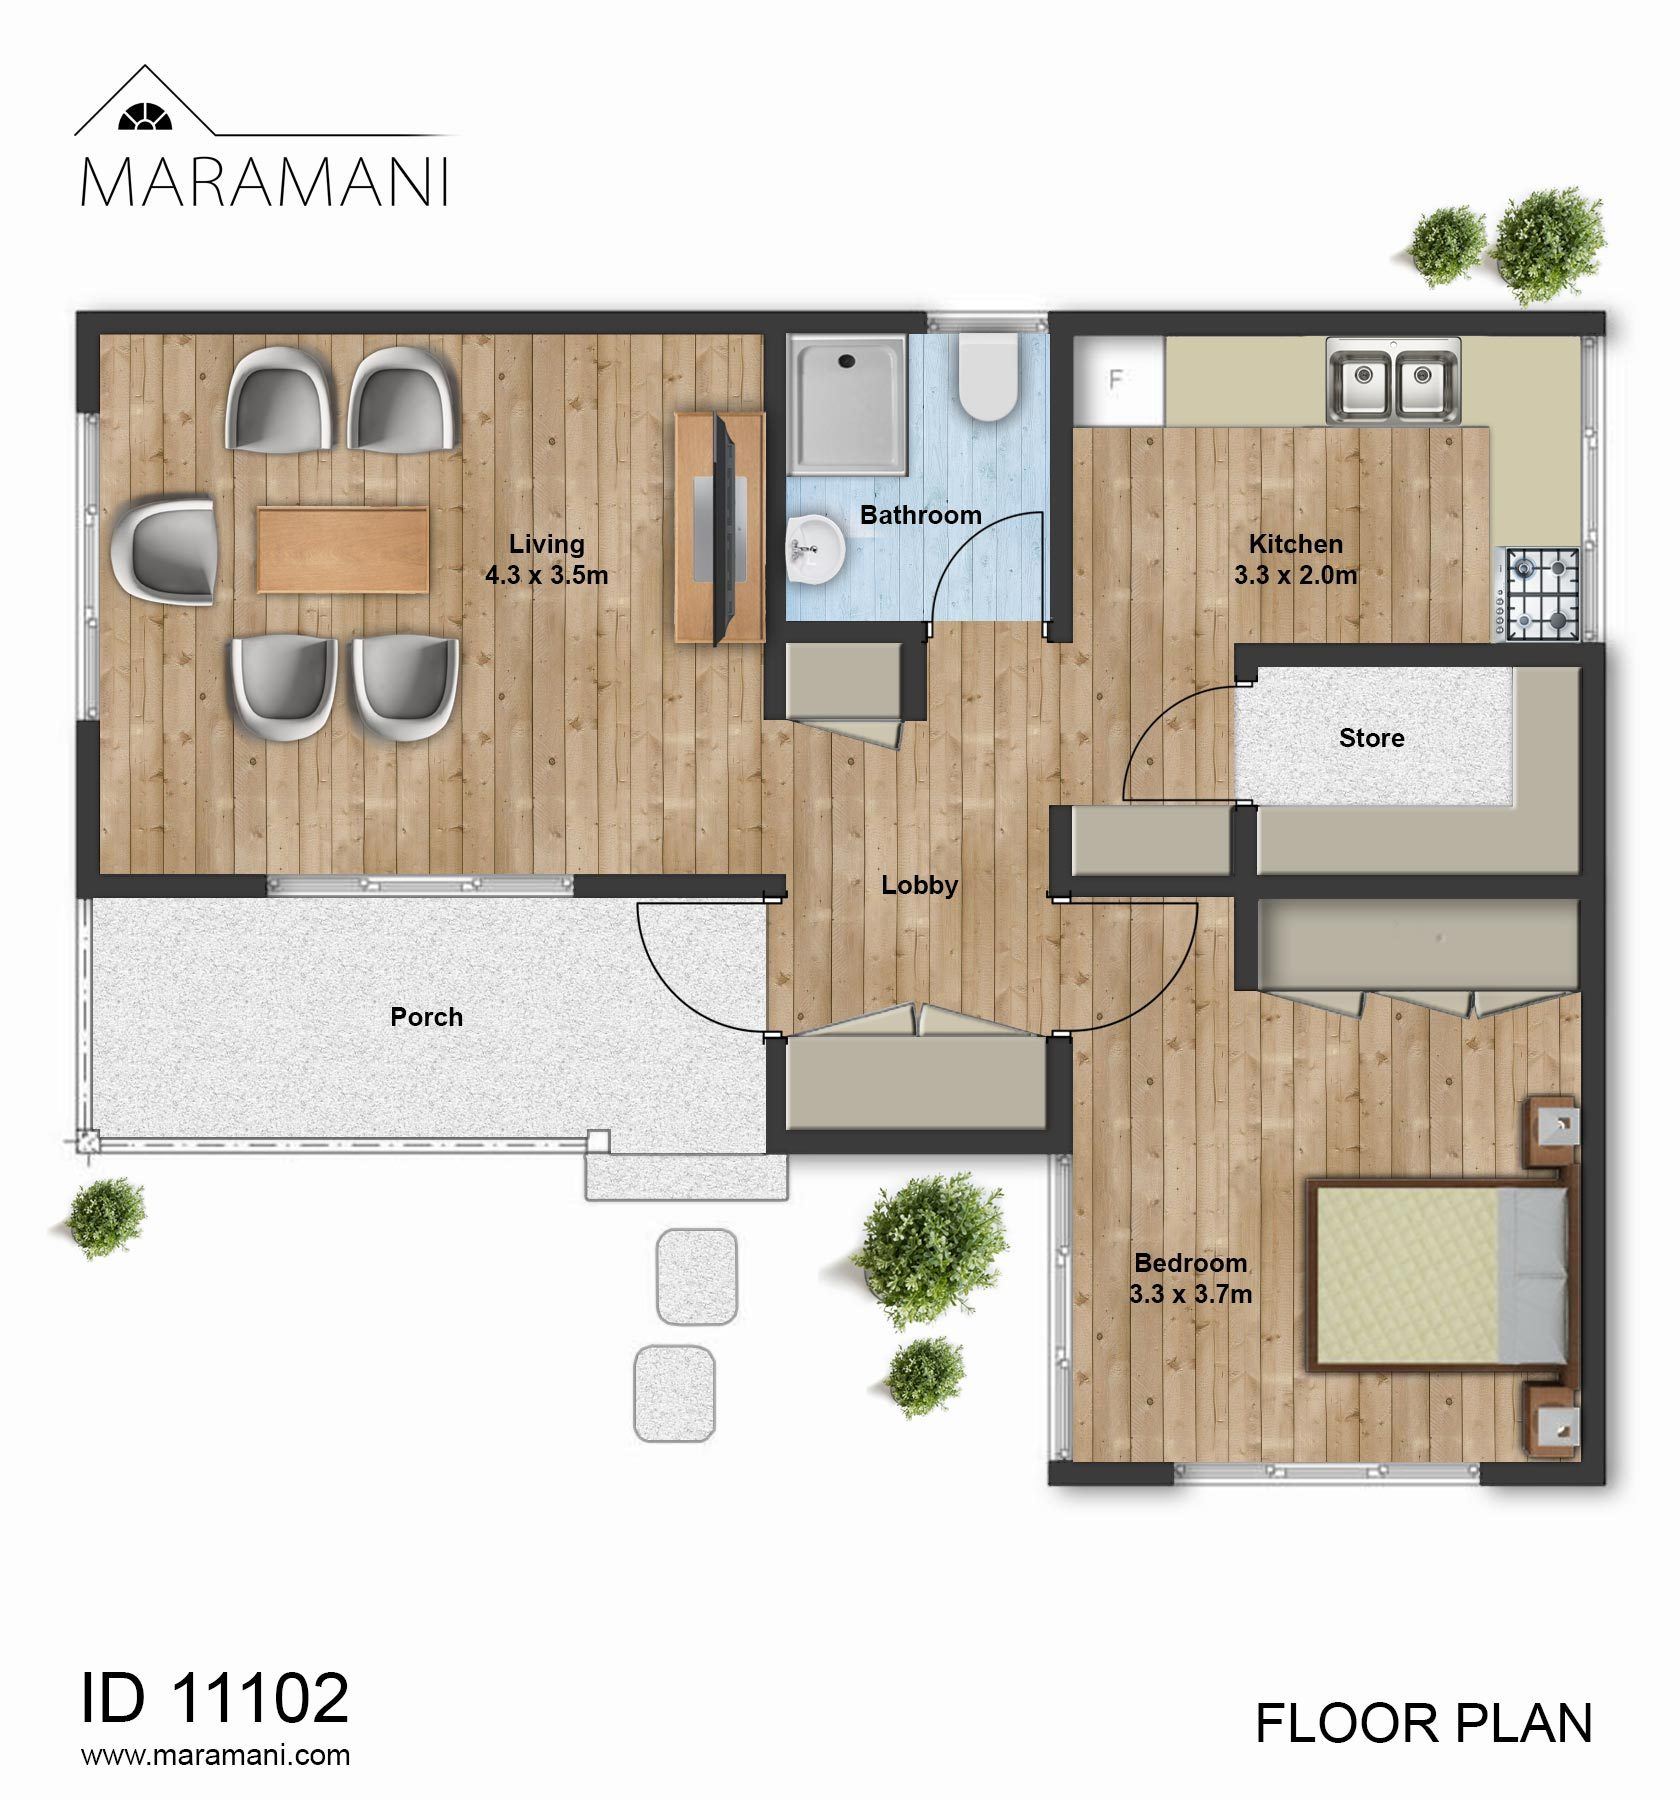 1 Bedroom House Plan - ID 11102